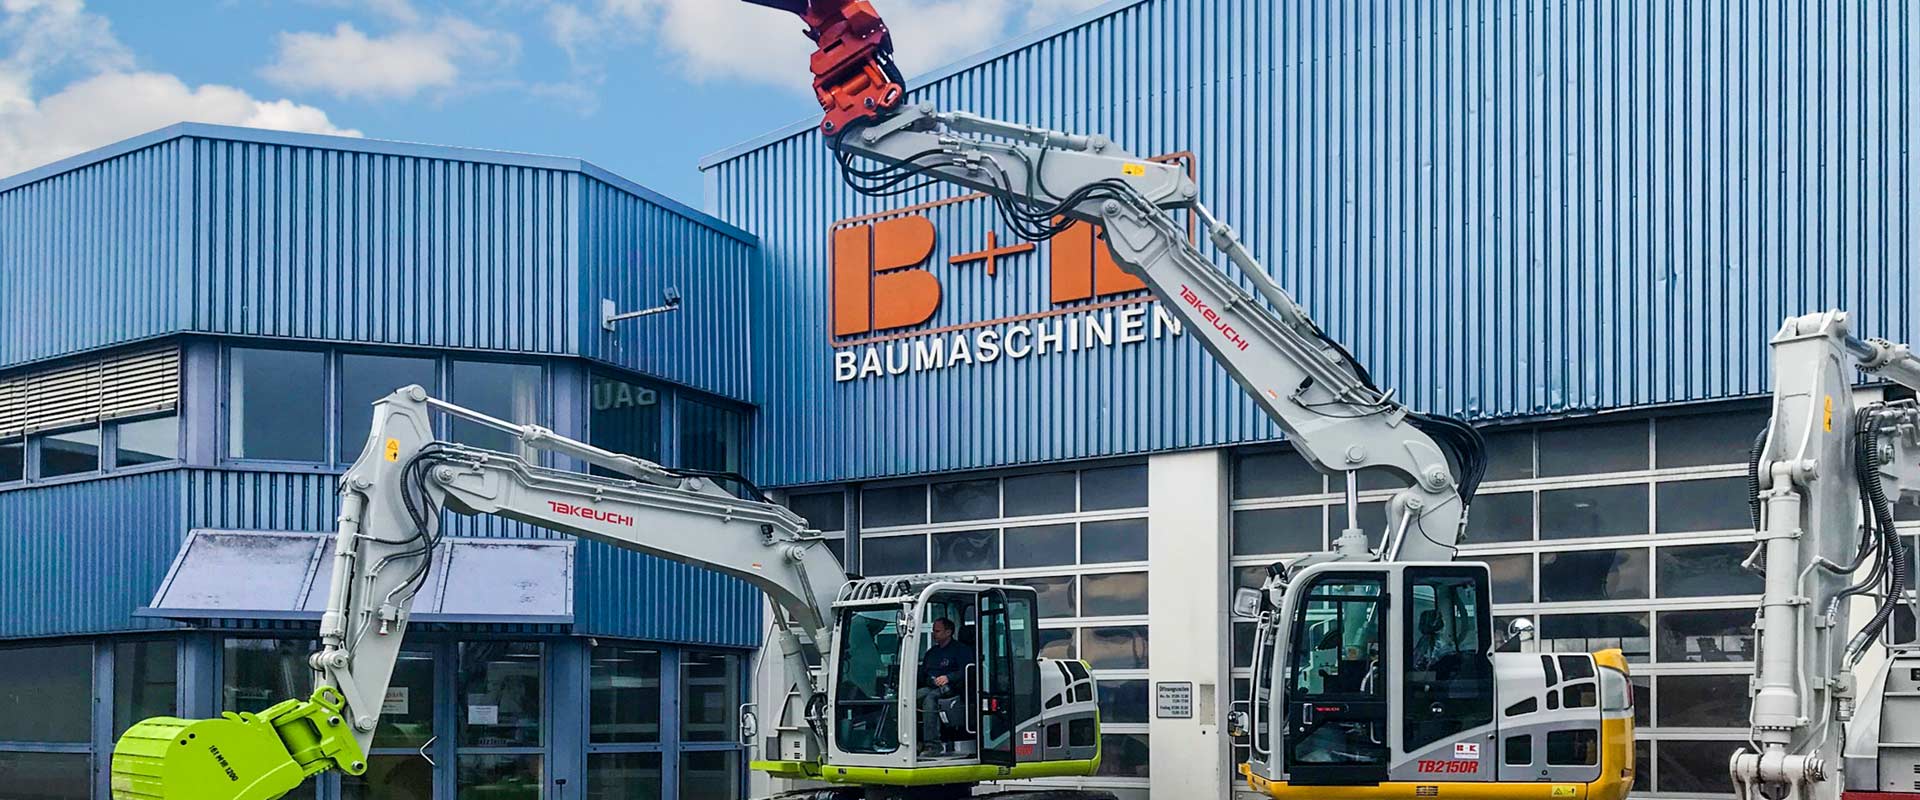 B+K Baumaschinen GmbH